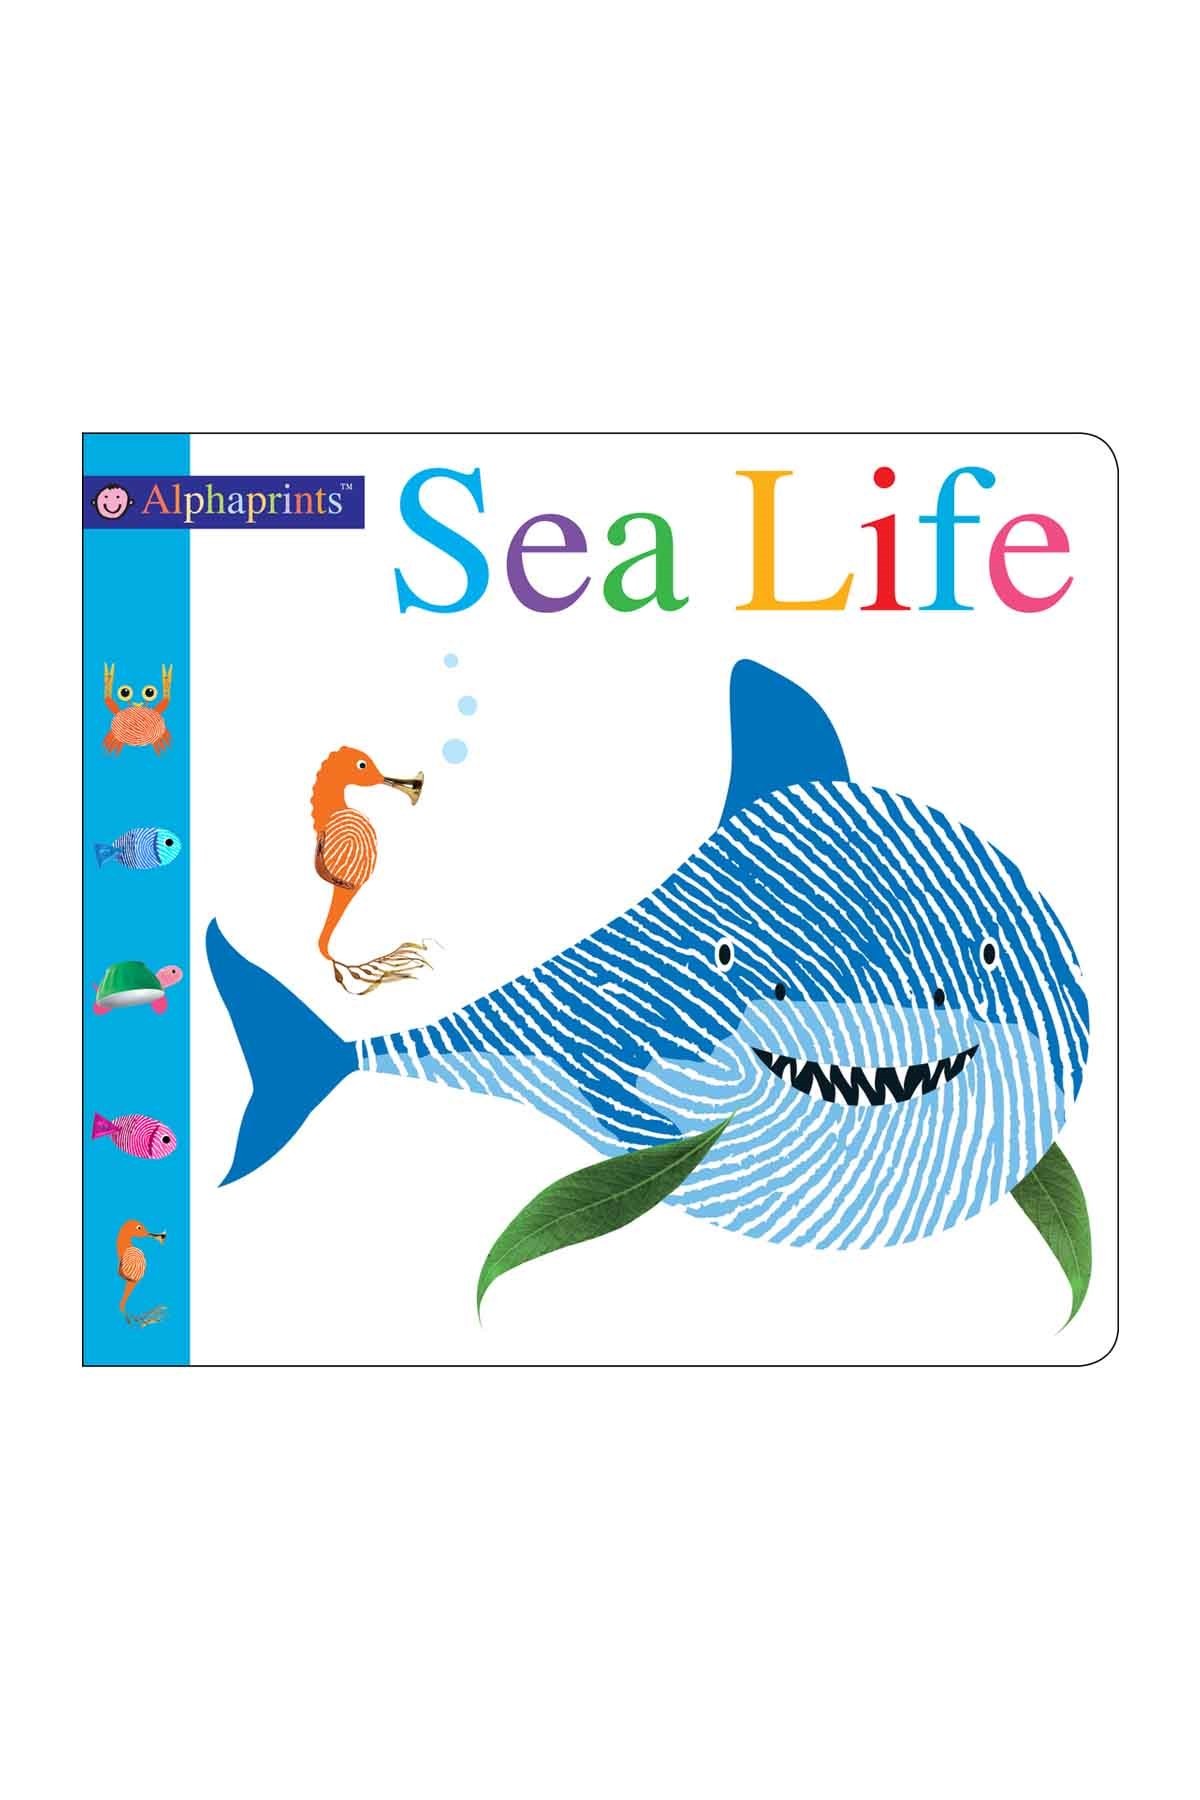 Priddy Books Alphaprints Sea Life